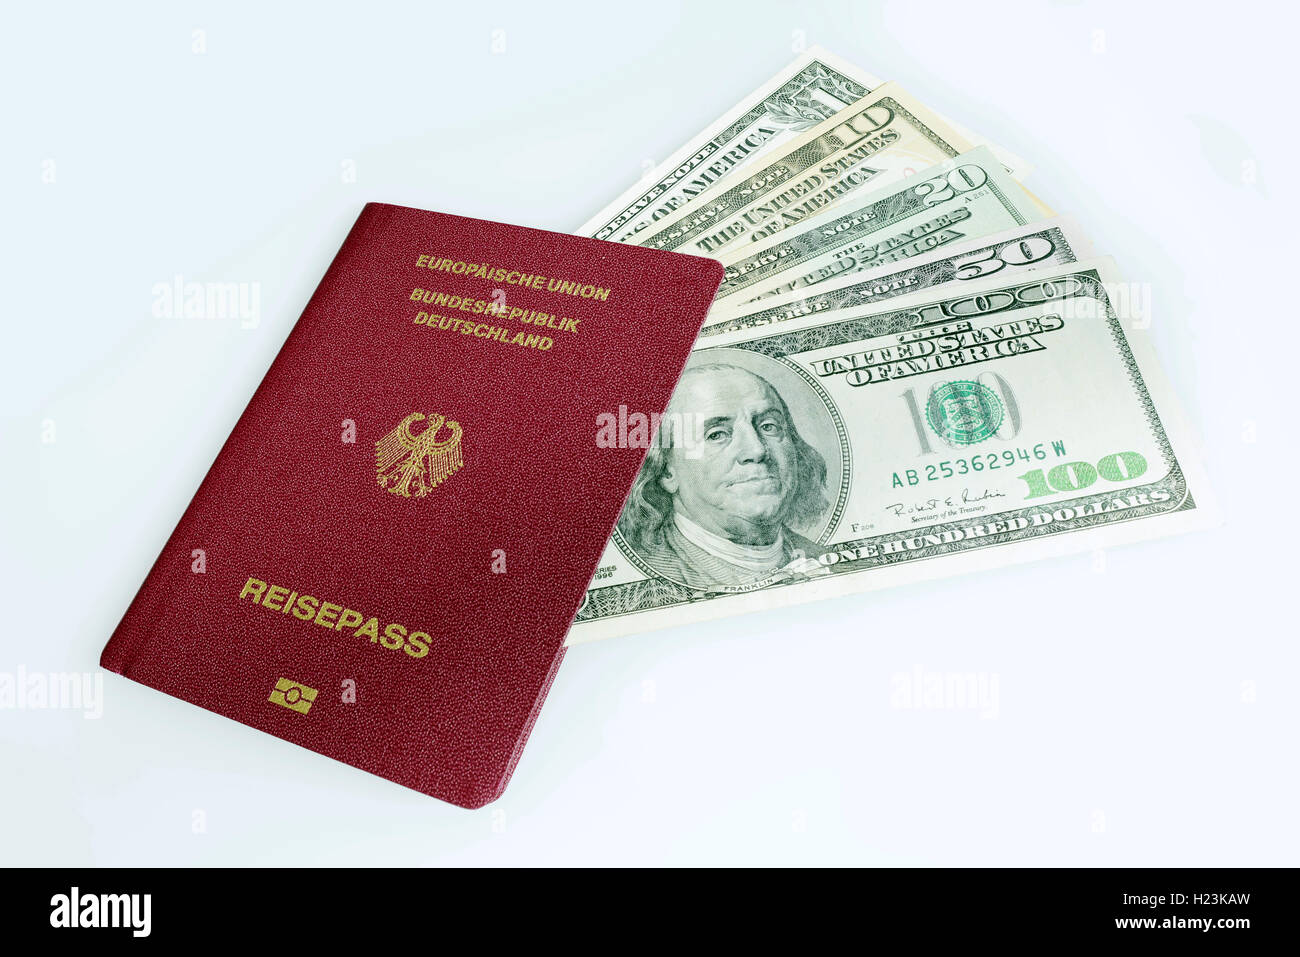 German passport and US dollar bills Stock Photo